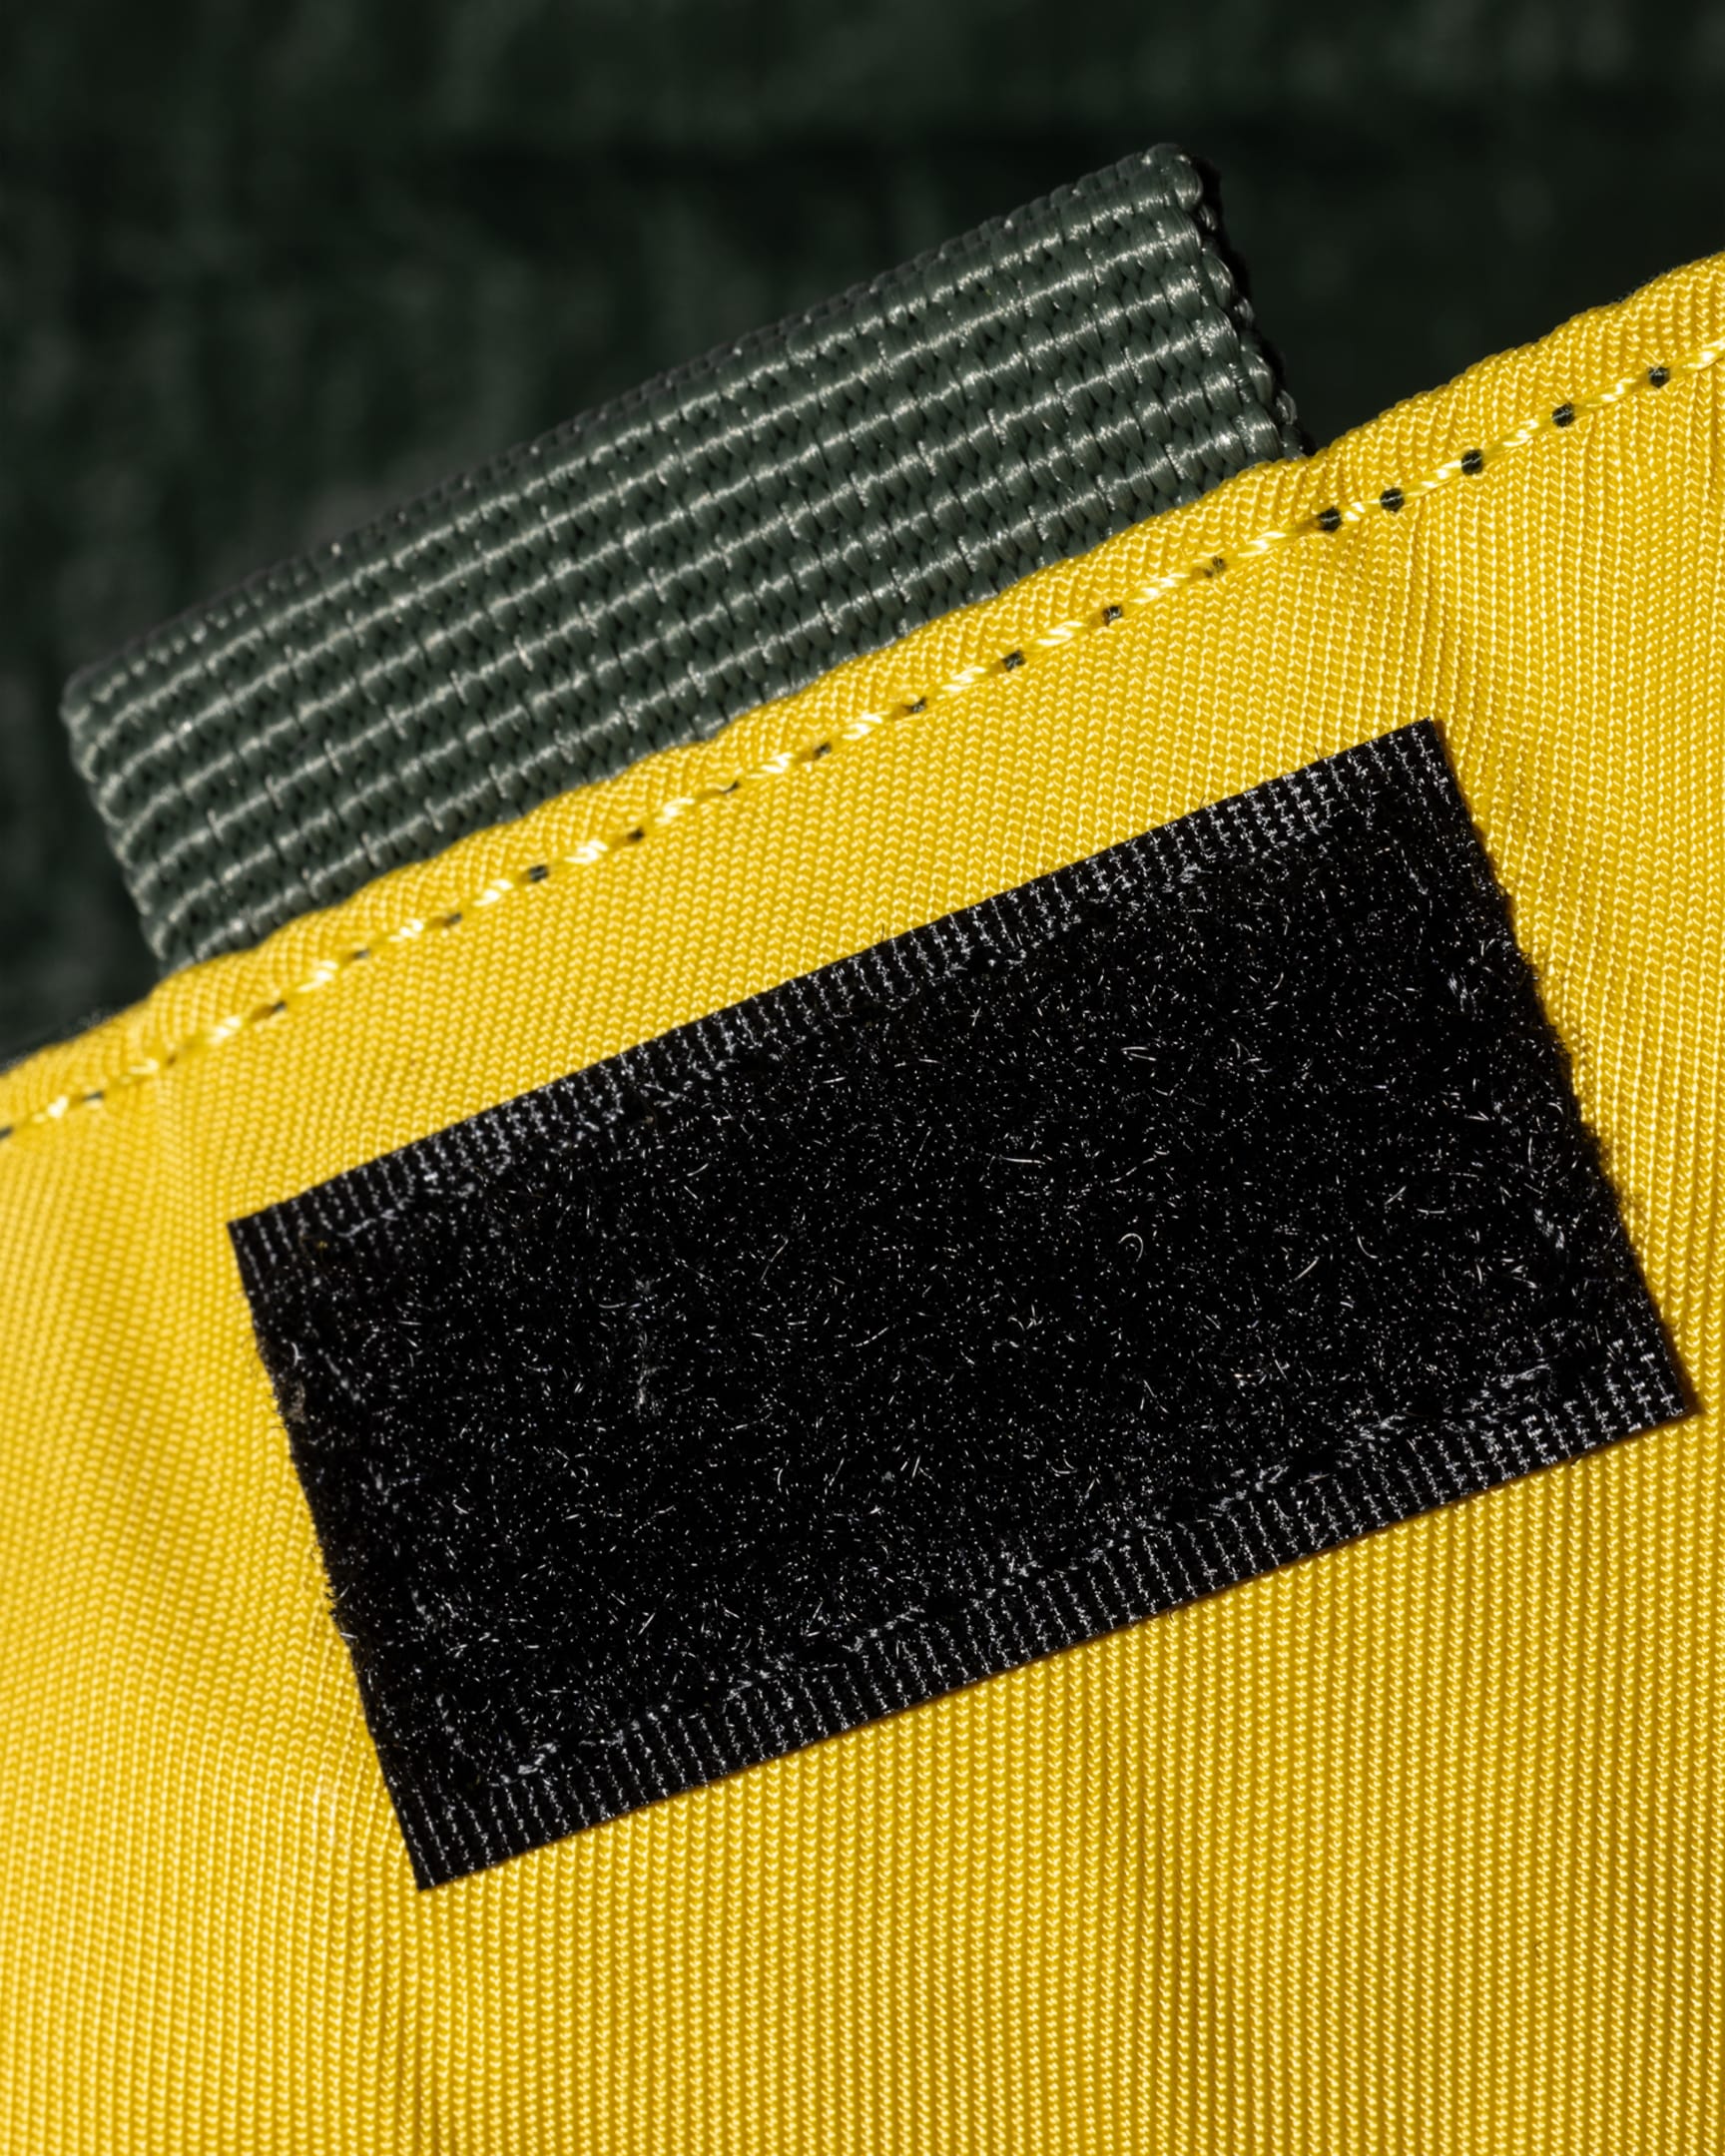 Detail View - Dark Green Nylon Ripstop Phone Bag Paul Smith